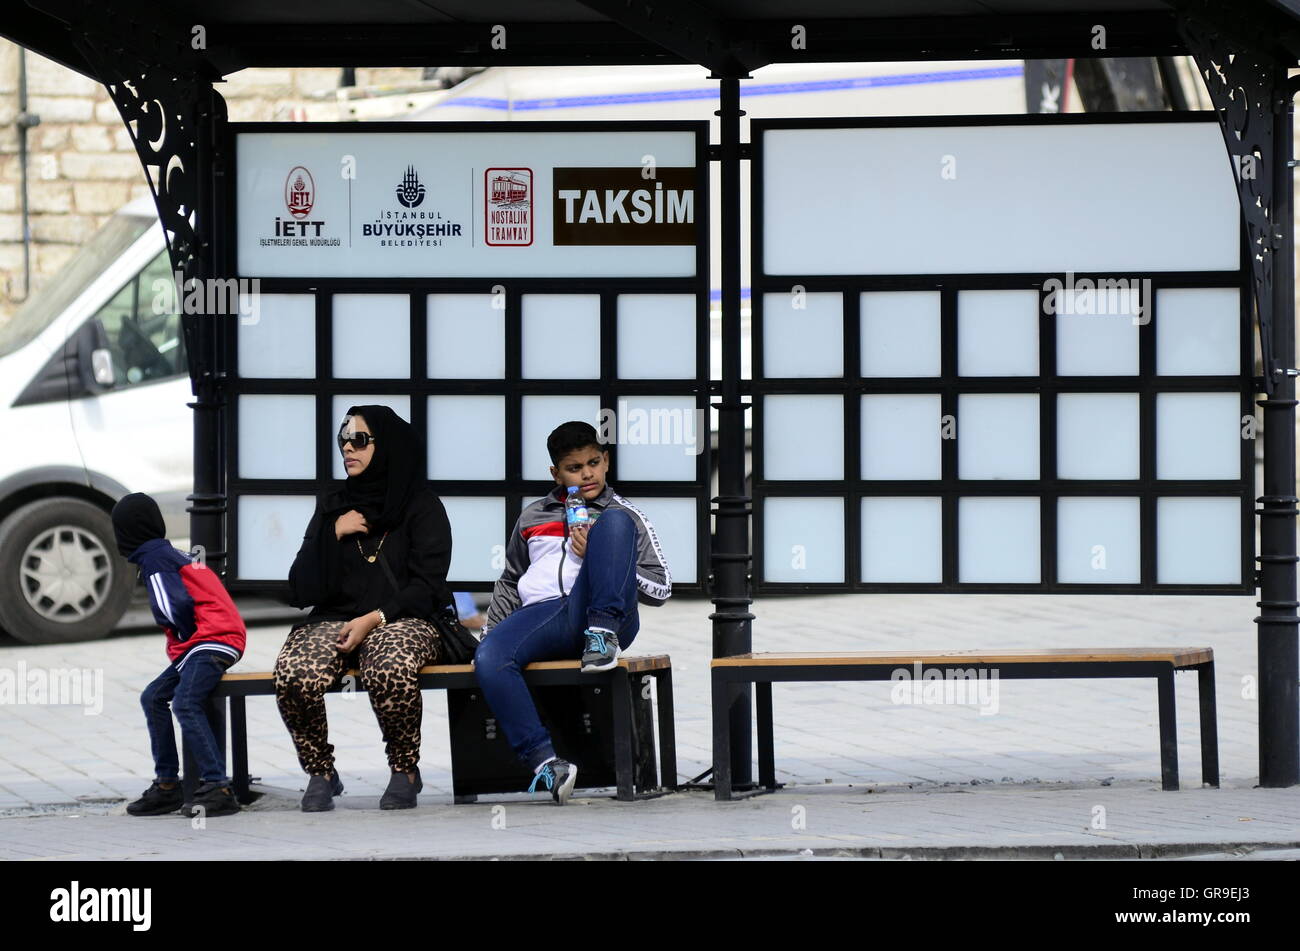 Street Scene At Taksim Square In Istanbul, Home To The Nostalgic Train Stock Photo